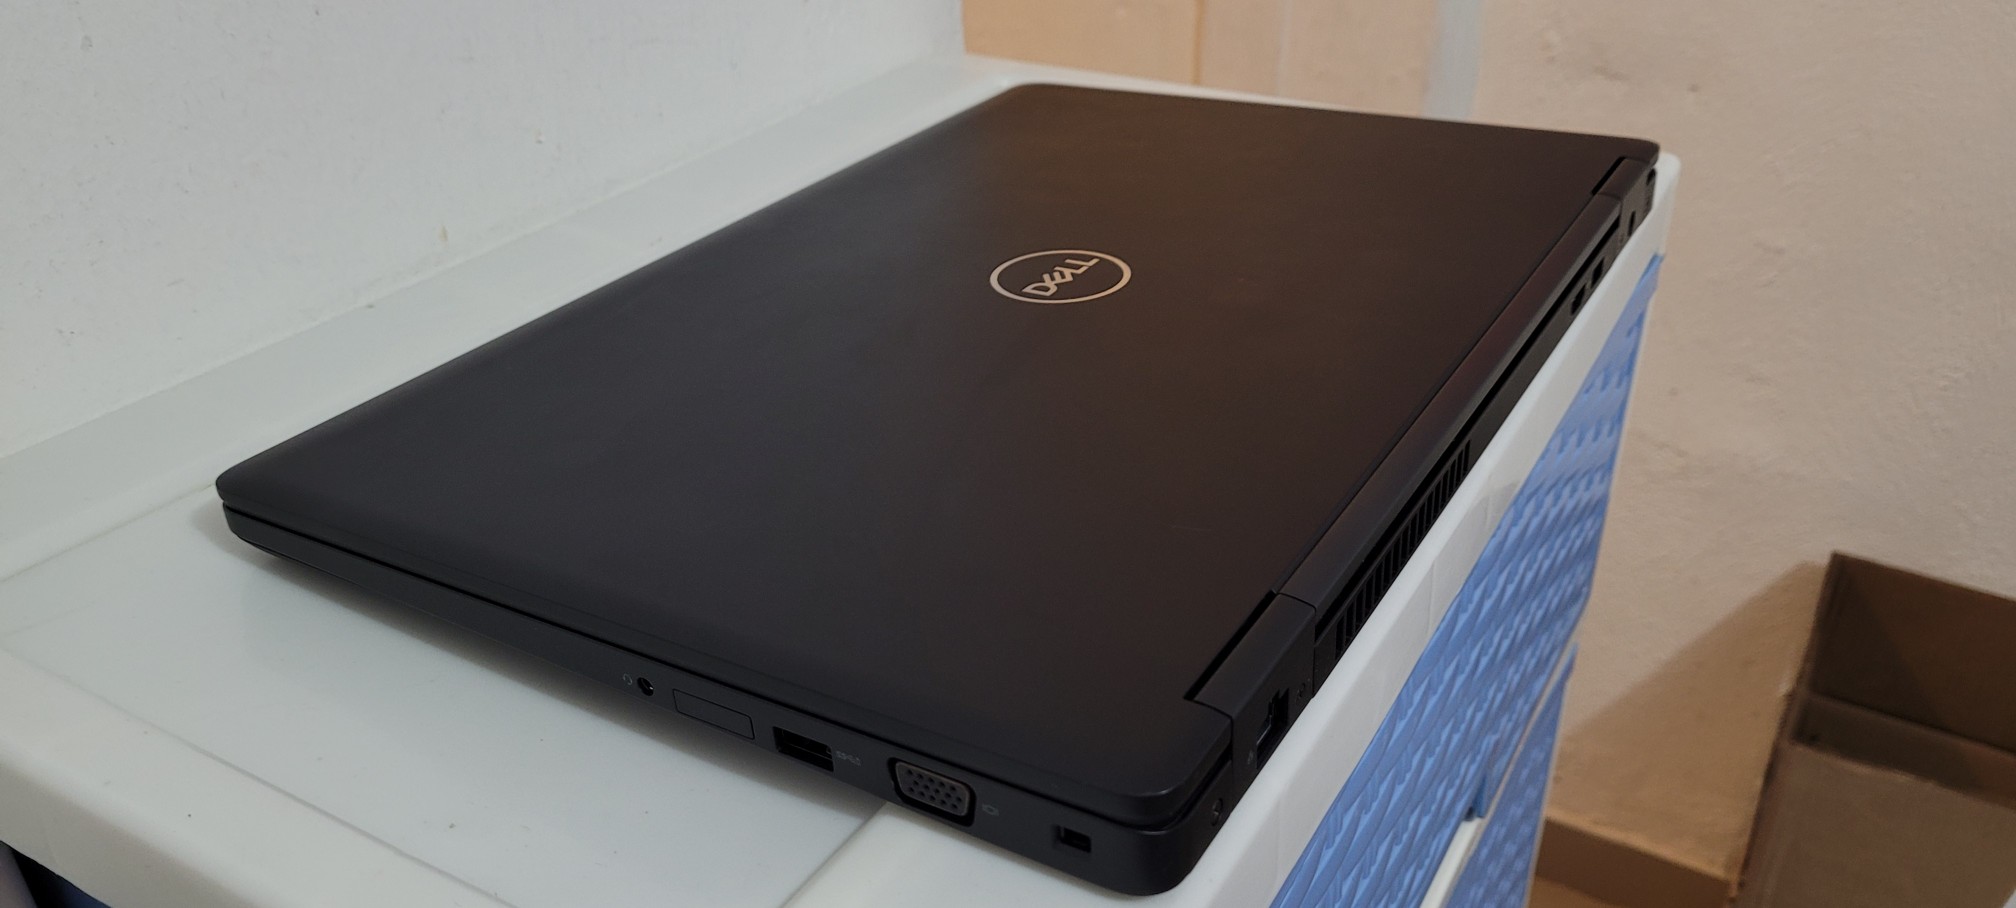 computadoras y laptops - Laptop Dell 5590 Touch 17 Pulg Core i7 2.11ghz 8va Gen Ram 16gb ddr4 Disco 512GB 2